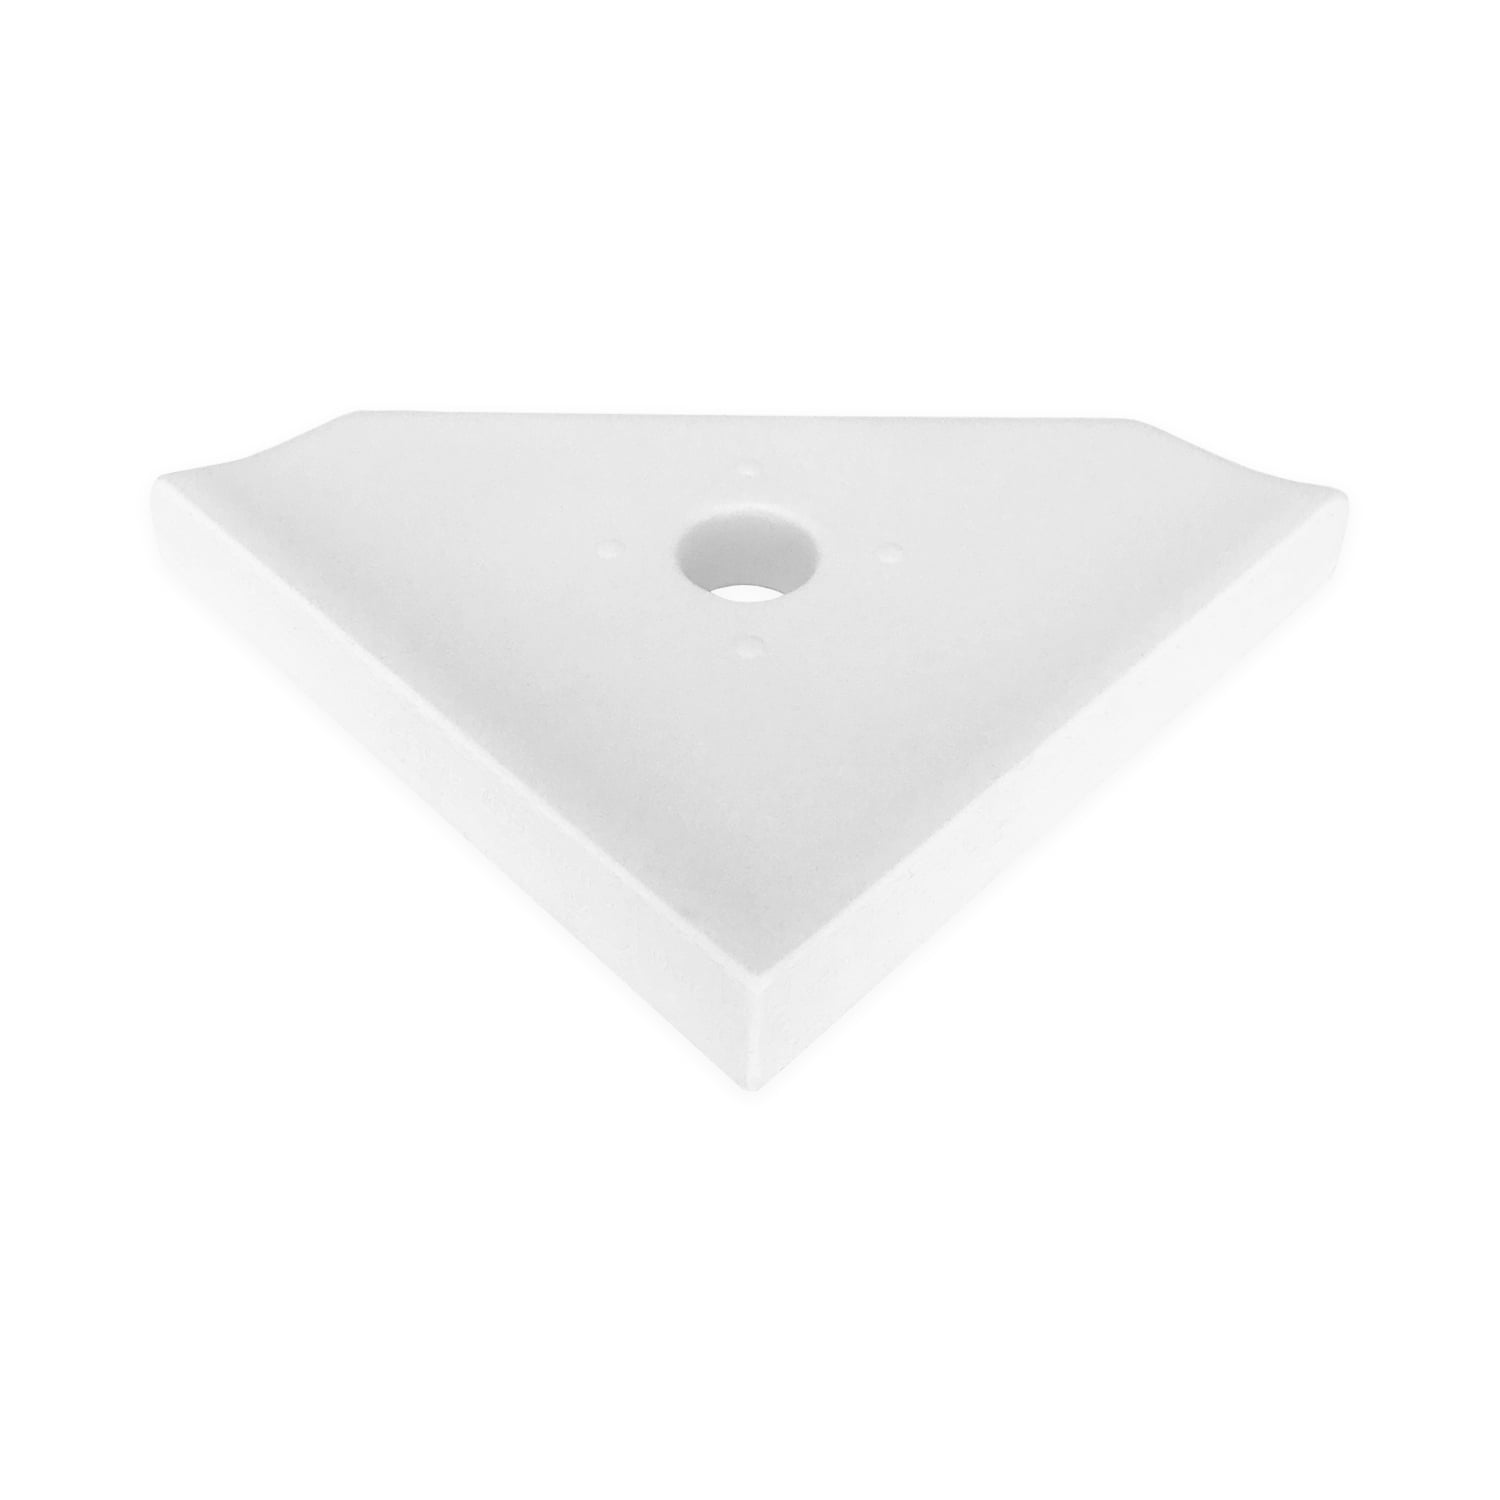 5″ Metro Flatback Corner Soap Dish – Available in 13 Colors – Questech